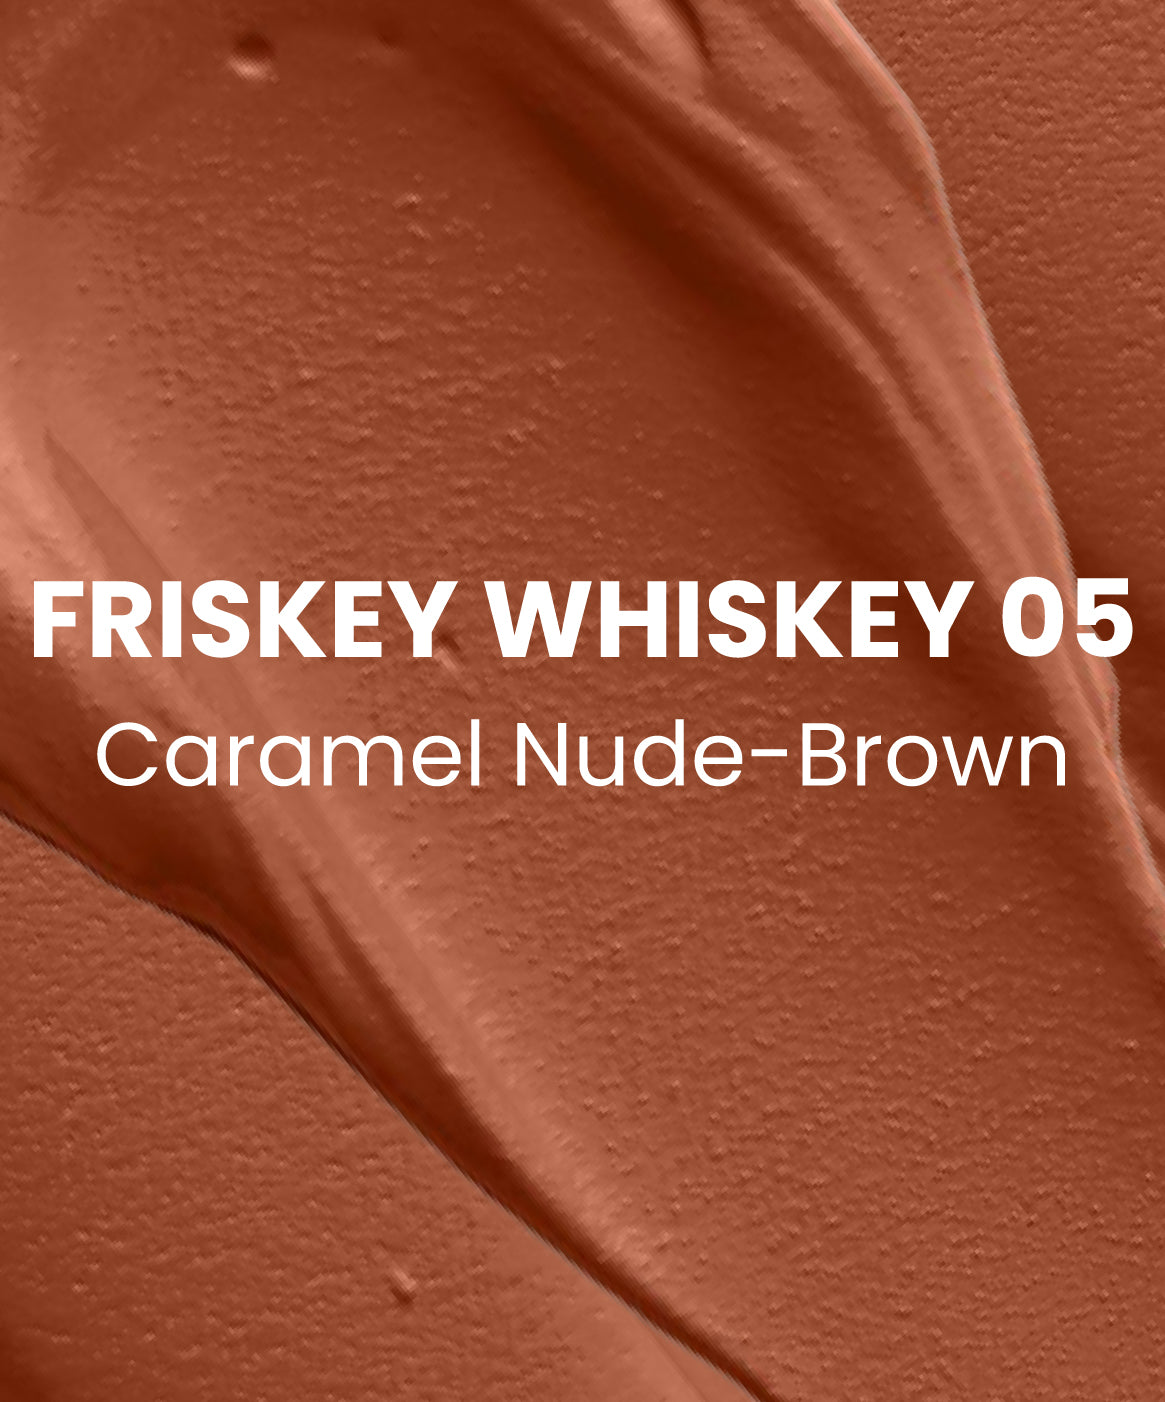 Frisky Whiskey 05 - Caramel nude - brown 